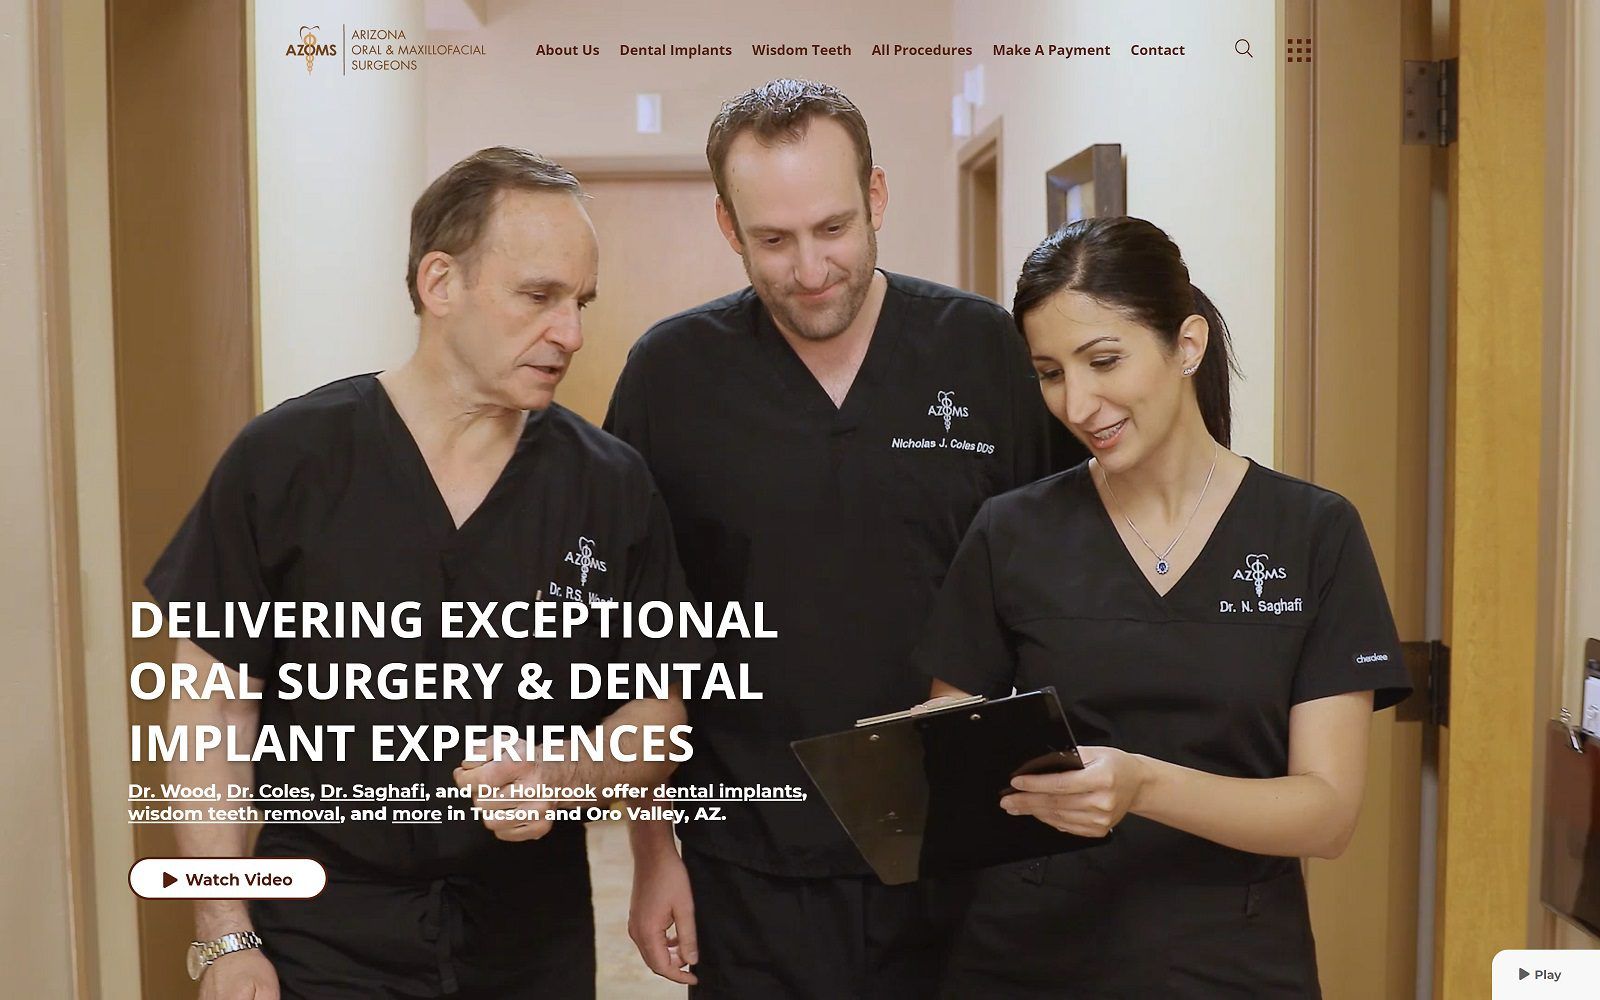 The screenshot of arizona oral and maxillofacial surgeons website